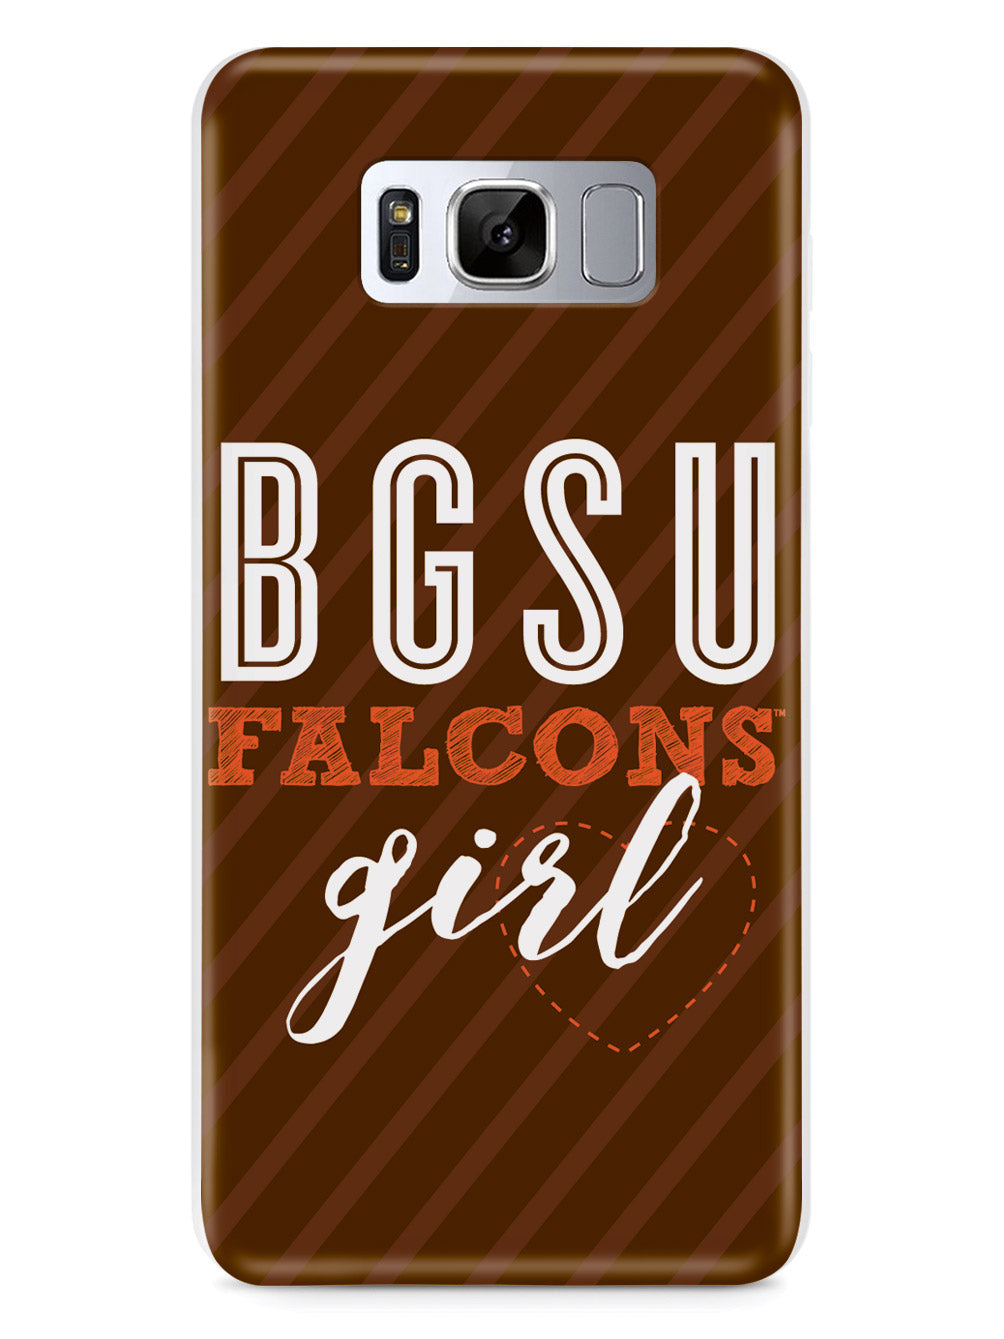 BGSU Falcons Girl Case